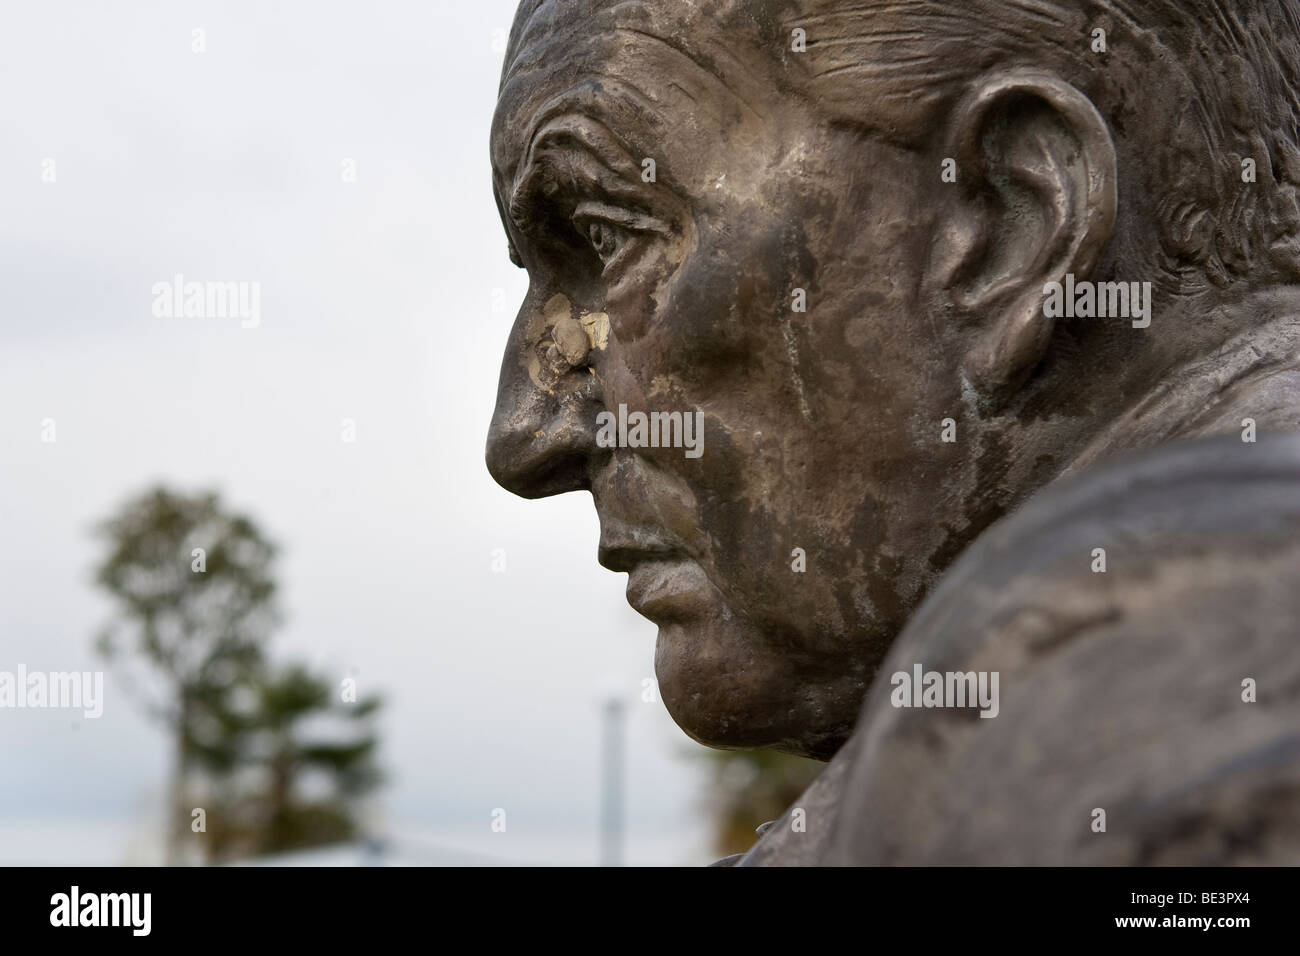 The statue of Vladimir Nabokov in Montreux, Switzerland Stock Photo